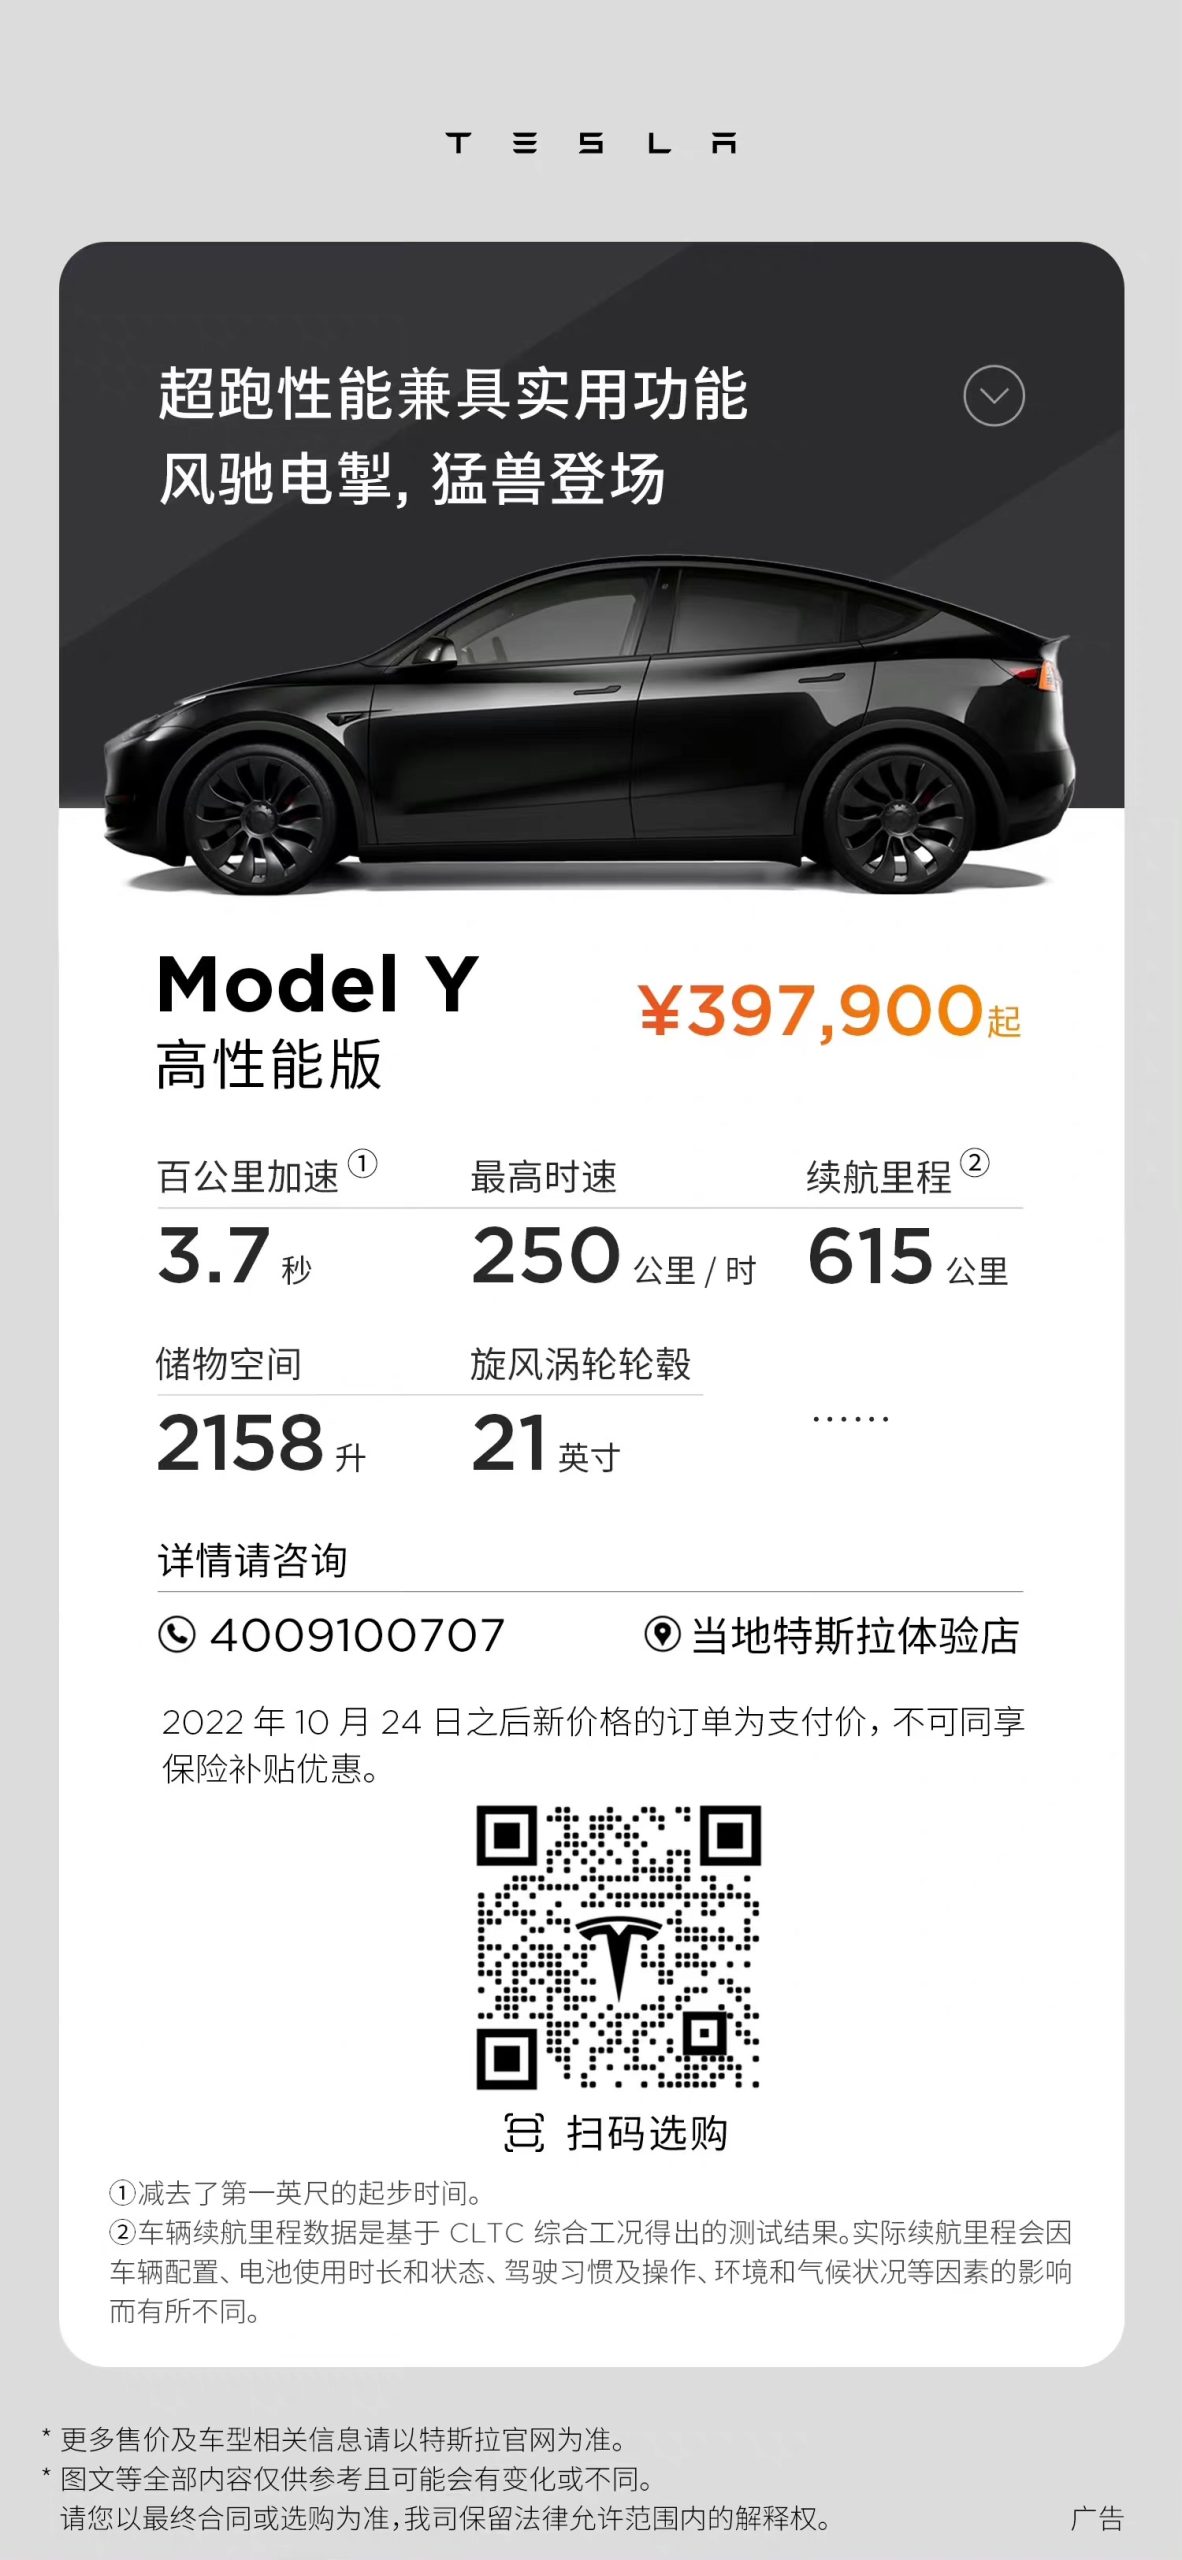 Tesla-china-Model-Y-Performance-price-cut